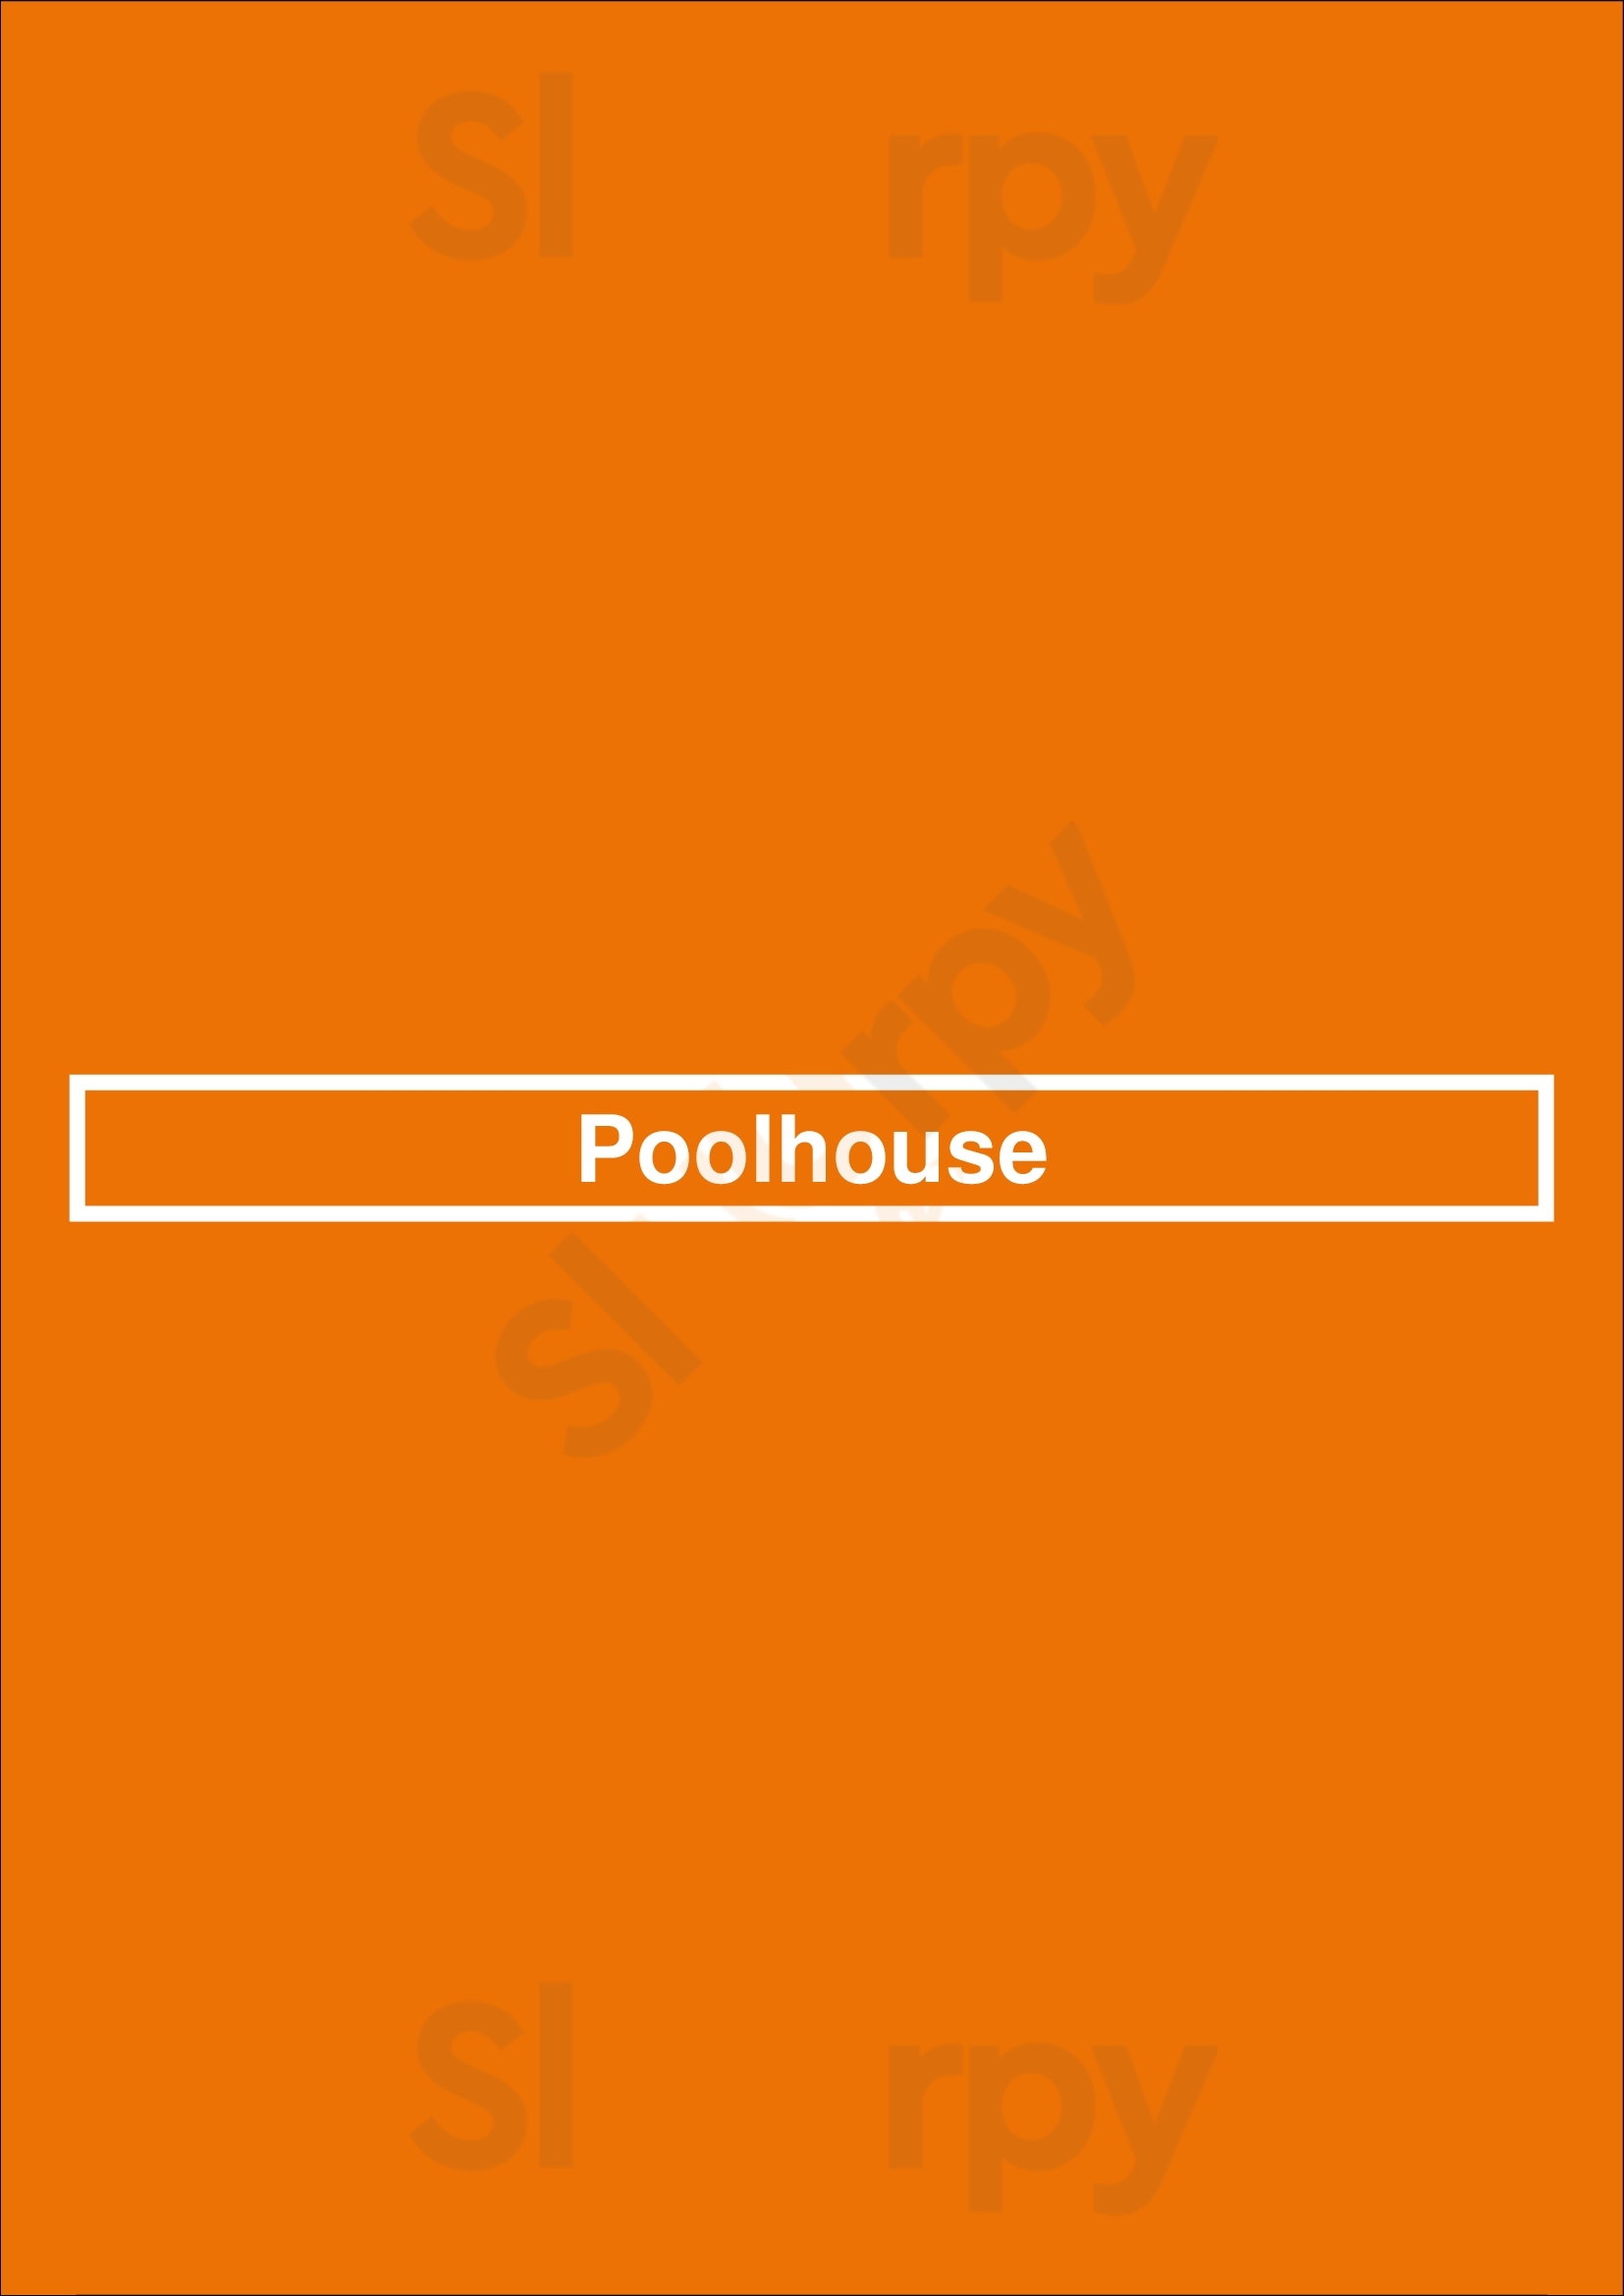 Poolhouse Kuala Lumpur Menu - 1